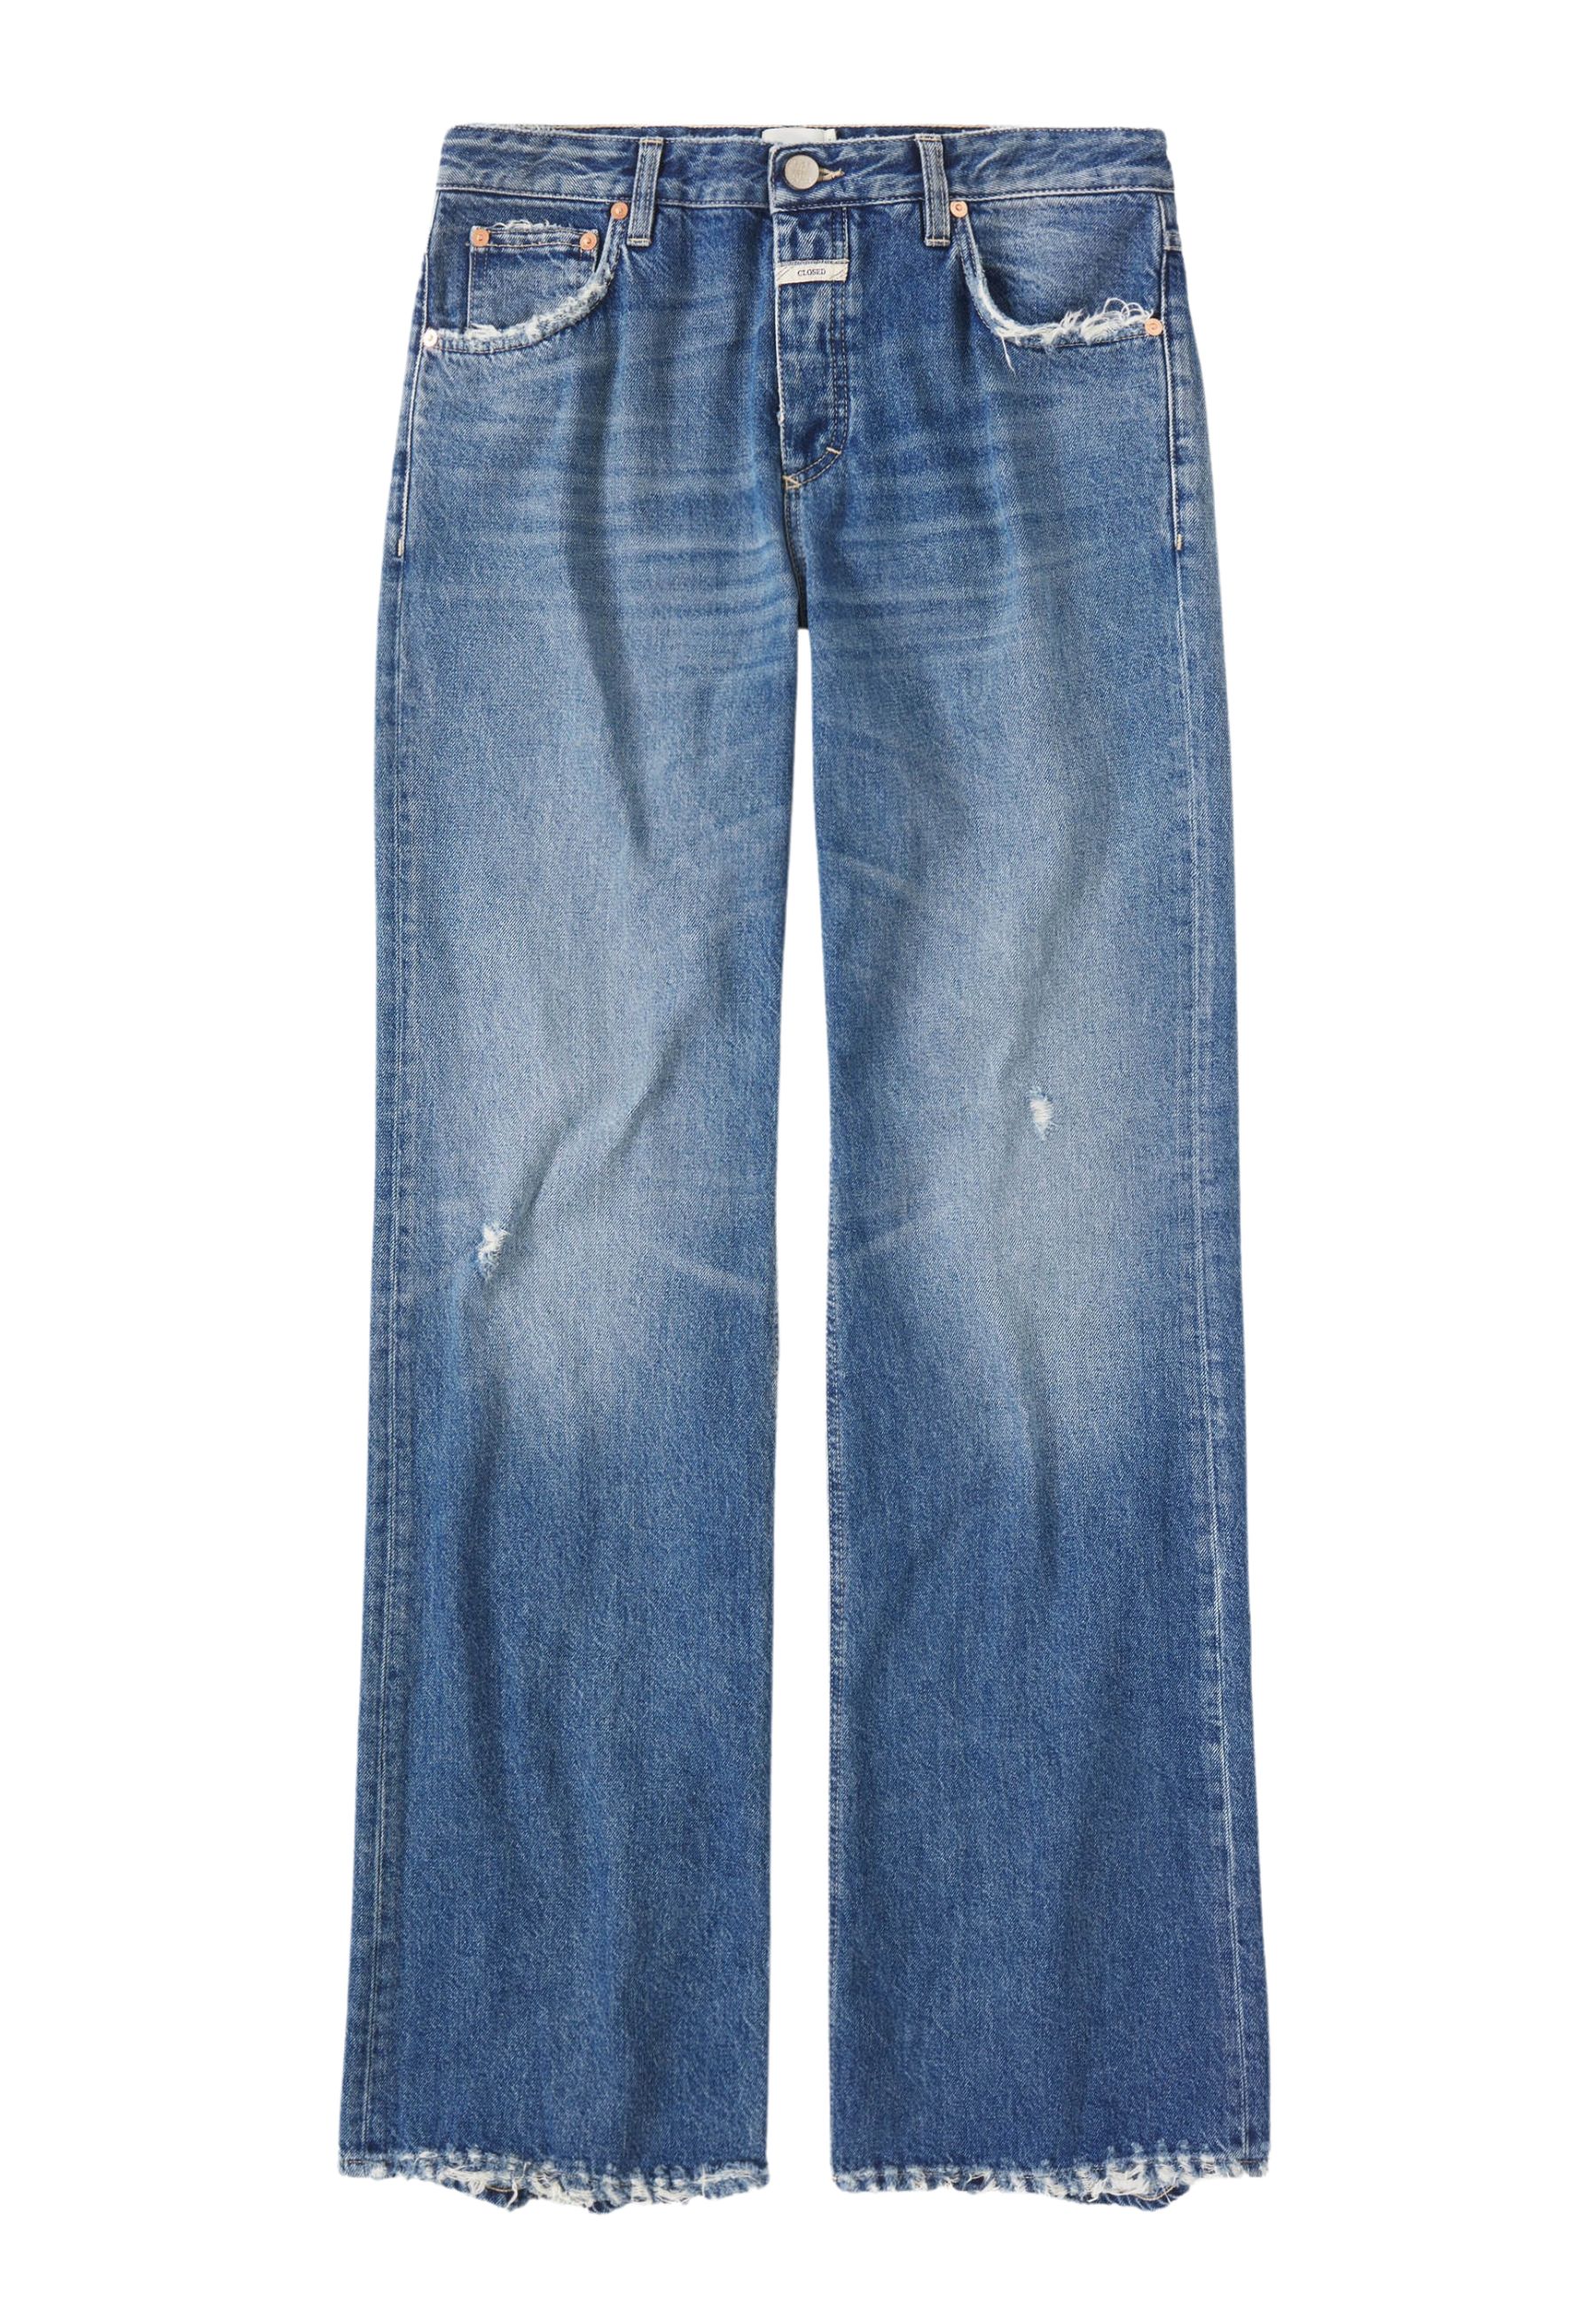 Closed Jeans Middenblauw Katoen maat 30/30 Gillan flared jeans middenblauw